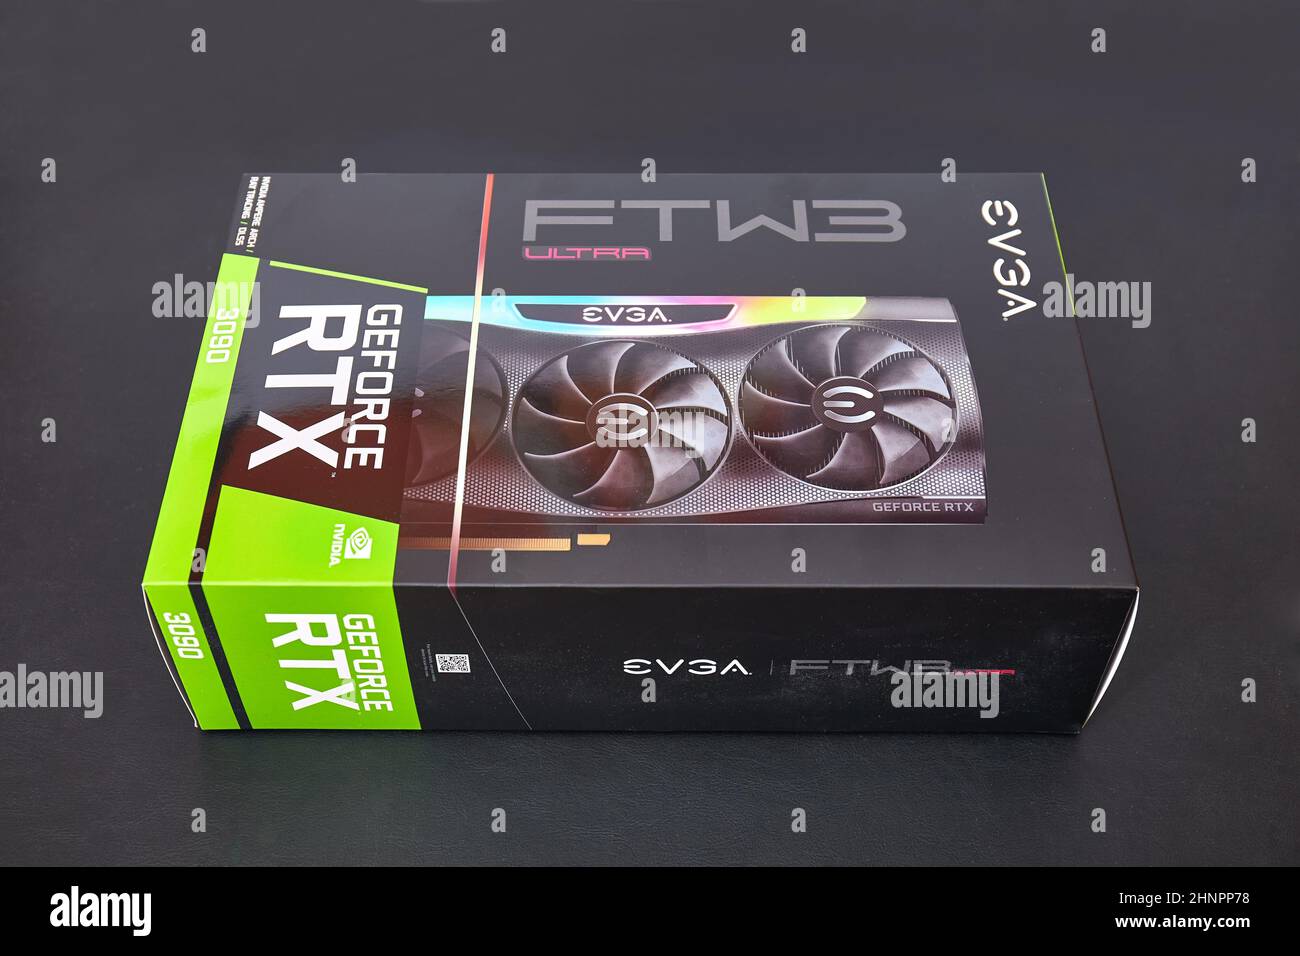 EVGA Geforce RTX 3090 Nvidia GPU box on a desk Stock Photo